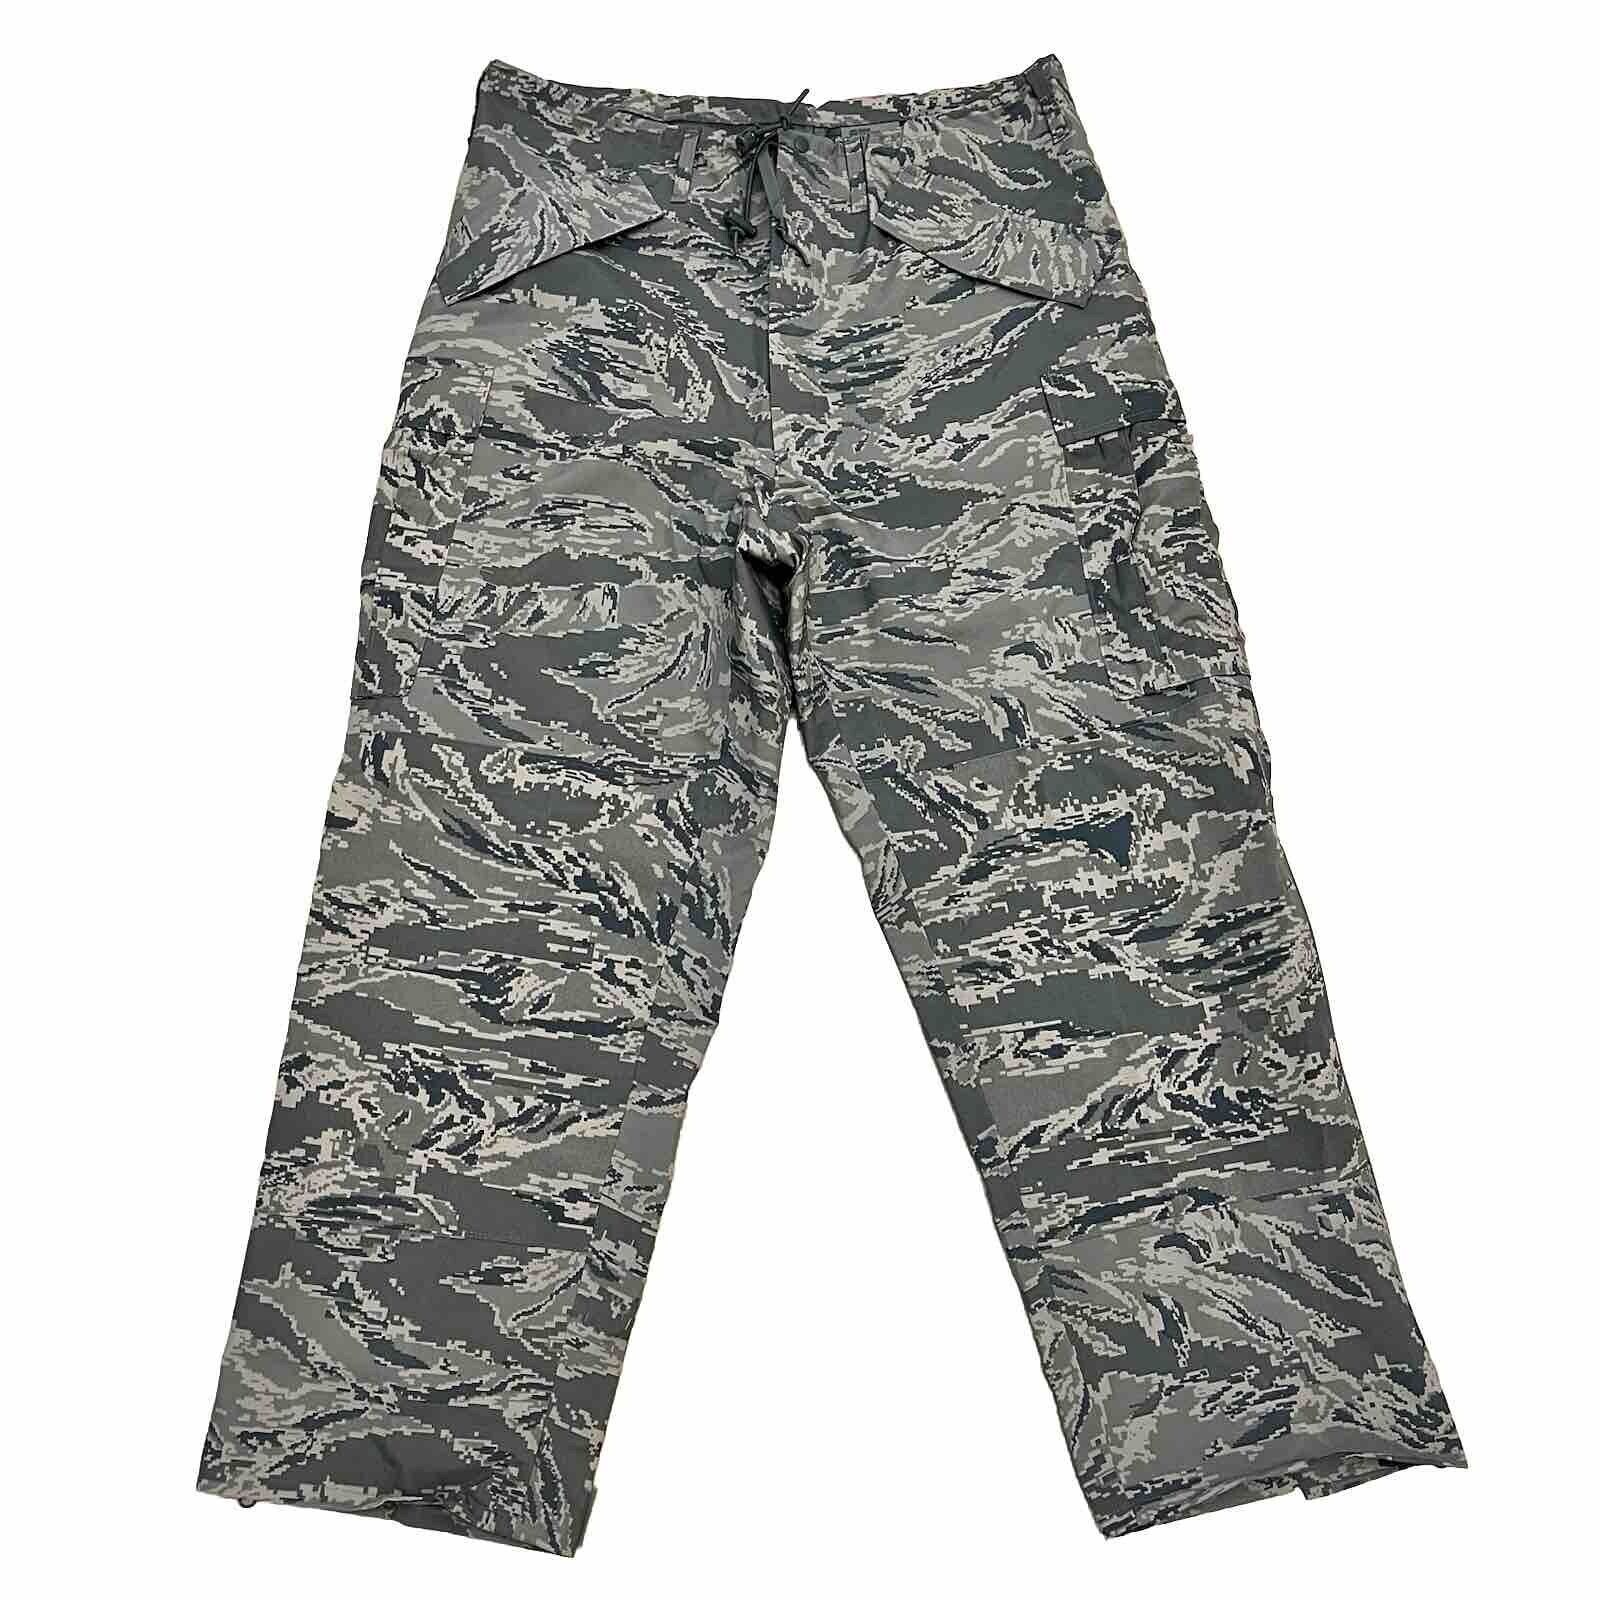 USAF All Purpose Environmental Trousers Pants Large GoreTex 8415-01-547-3026 NEW